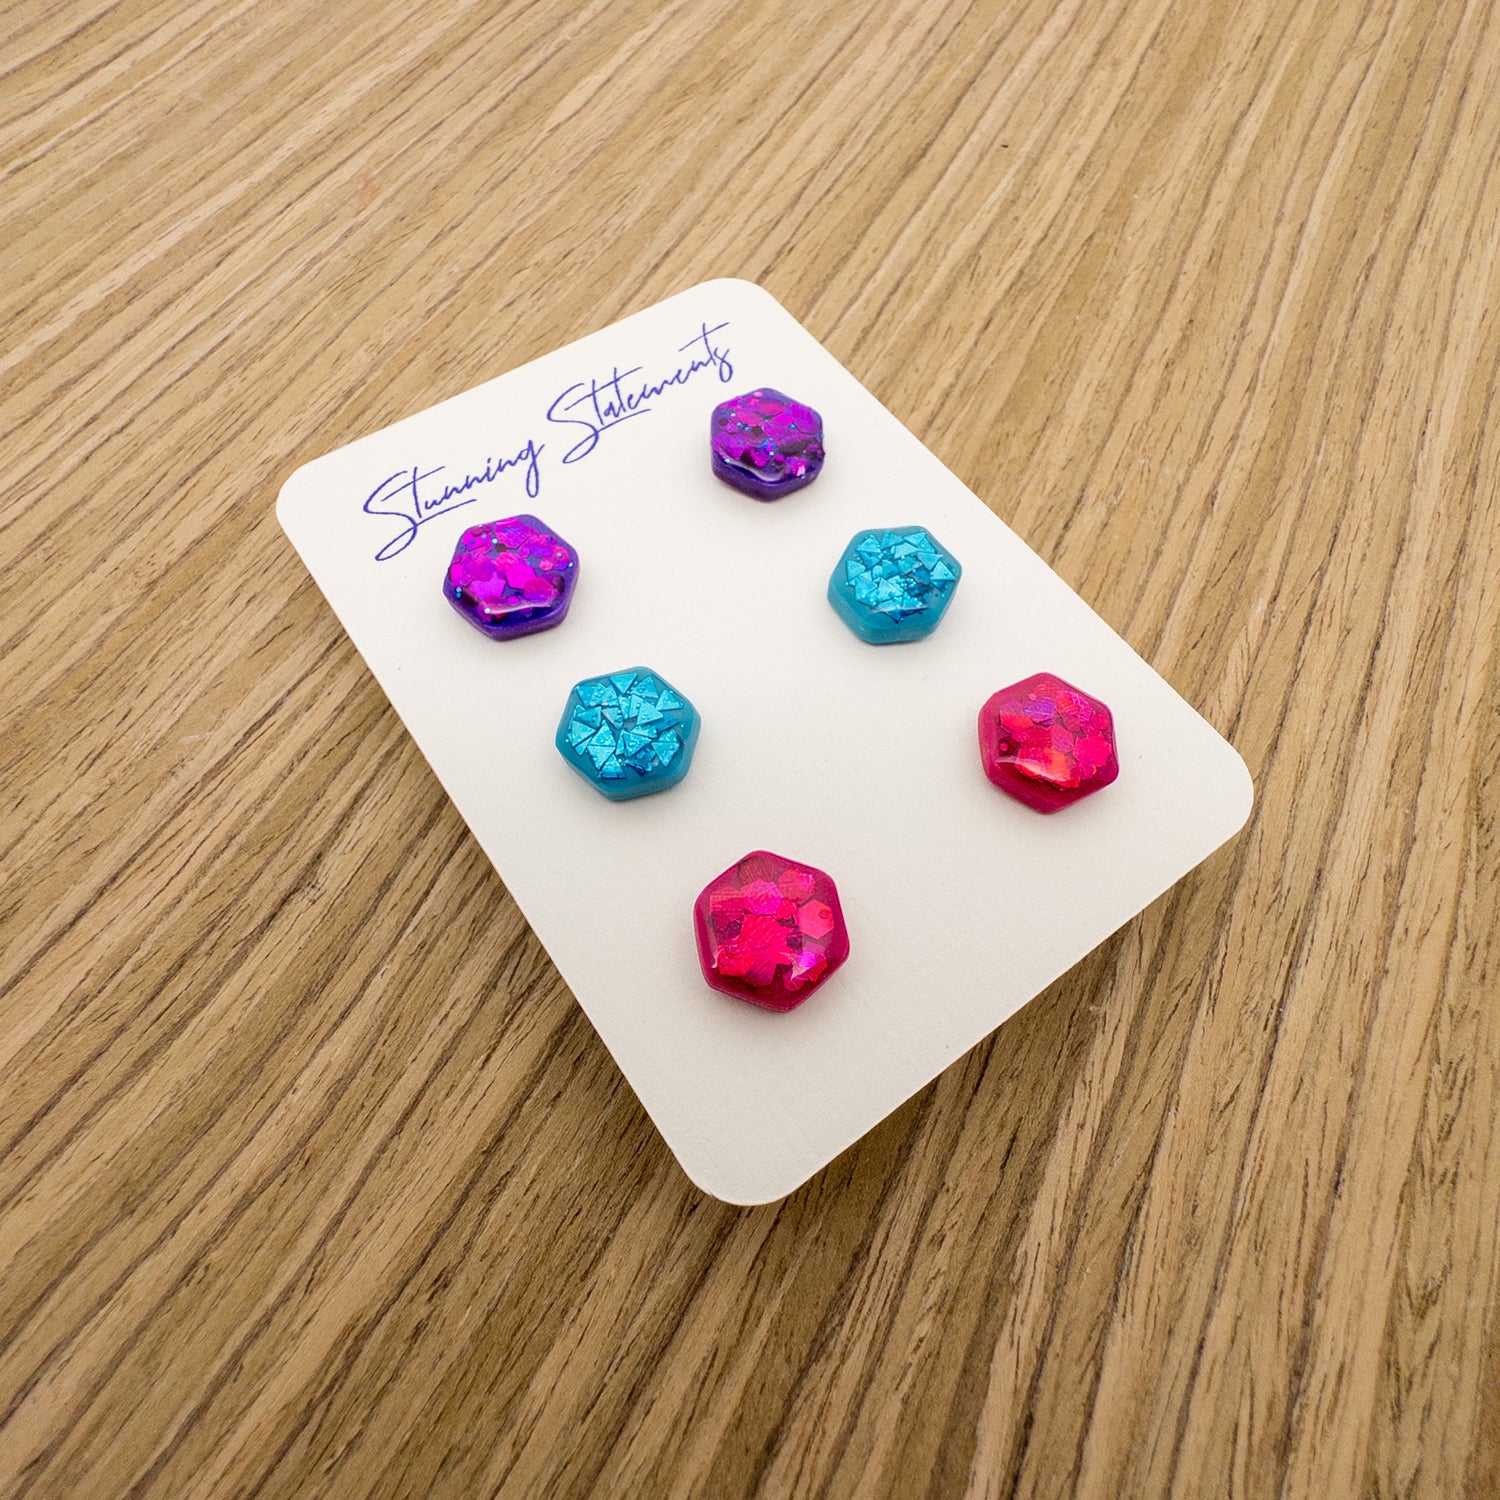 stunning statements girls clay bright lightweight fun cute purple pink blue teddi stud earrings